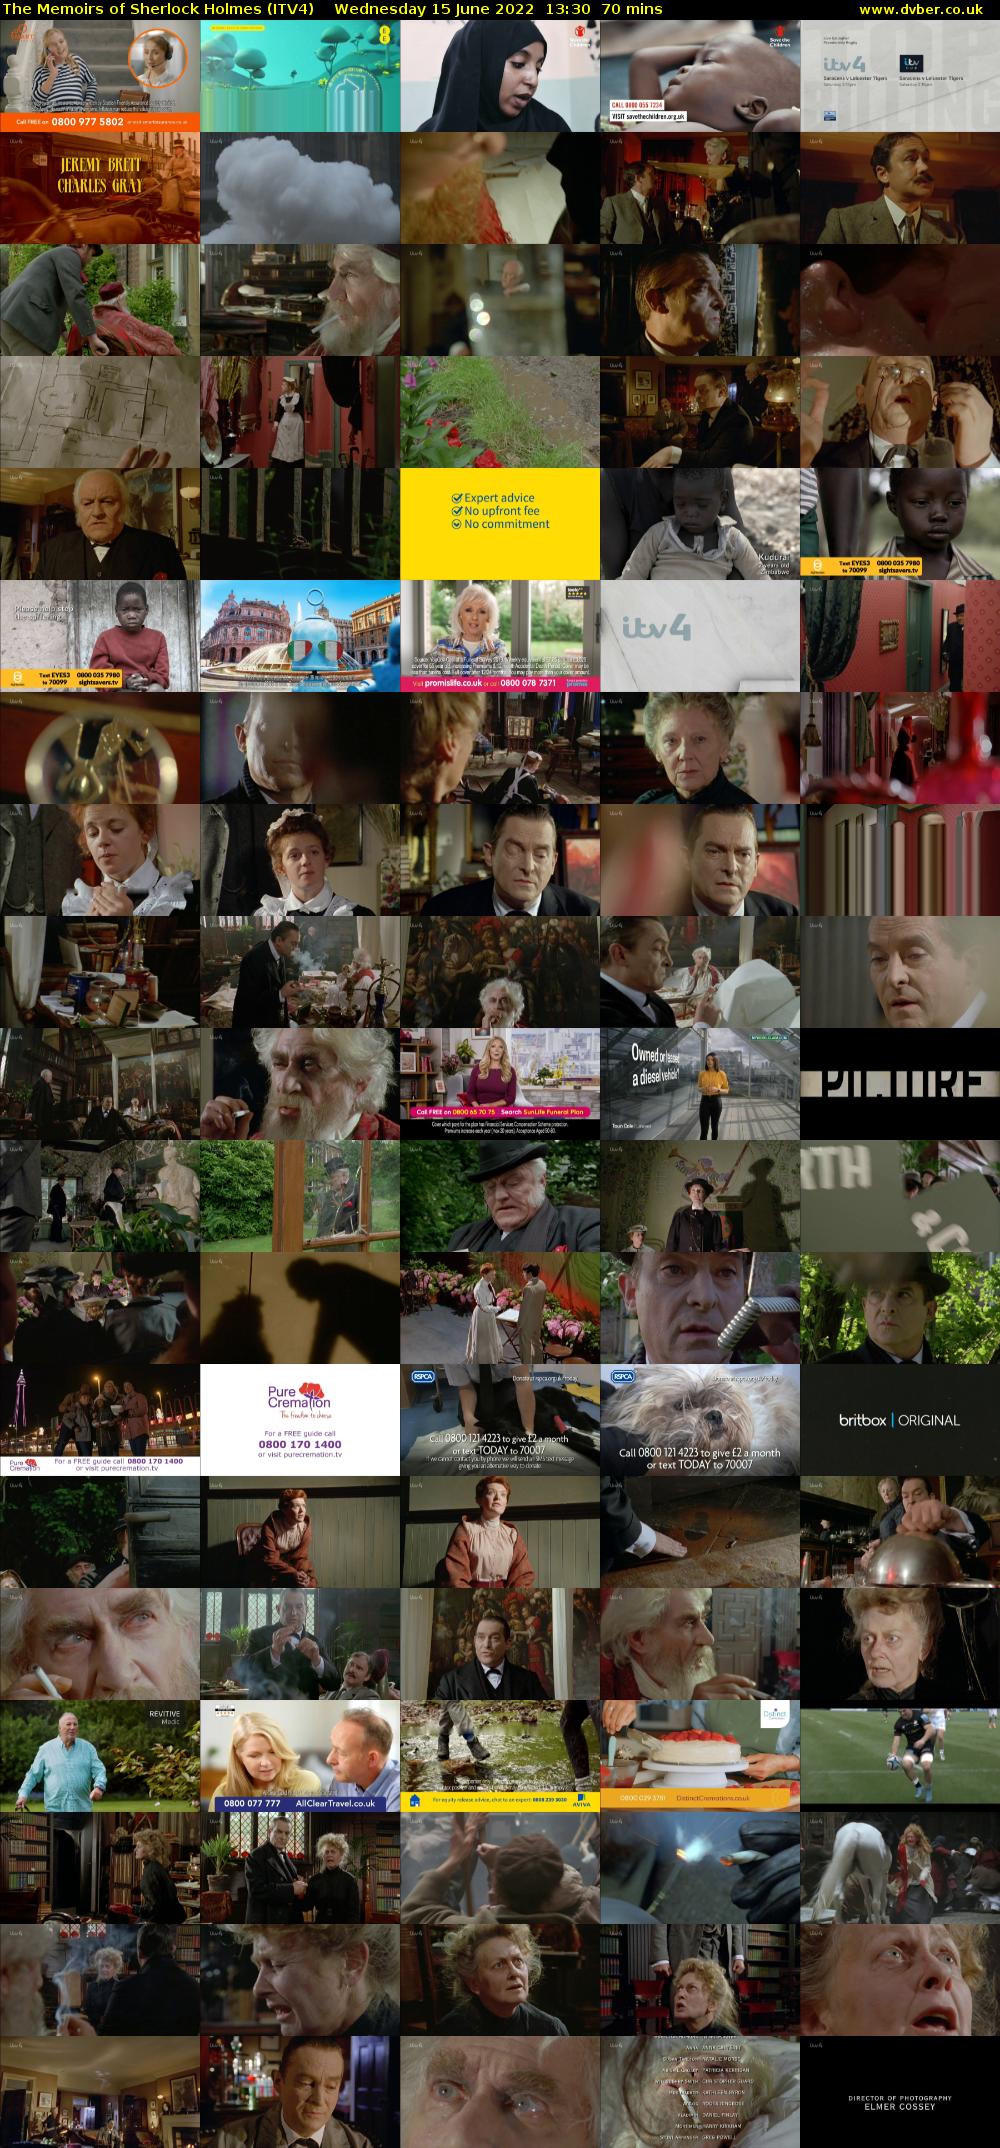 The Memoirs of Sherlock Holmes (ITV4) Wednesday 15 June 2022 13:30 - 14:40